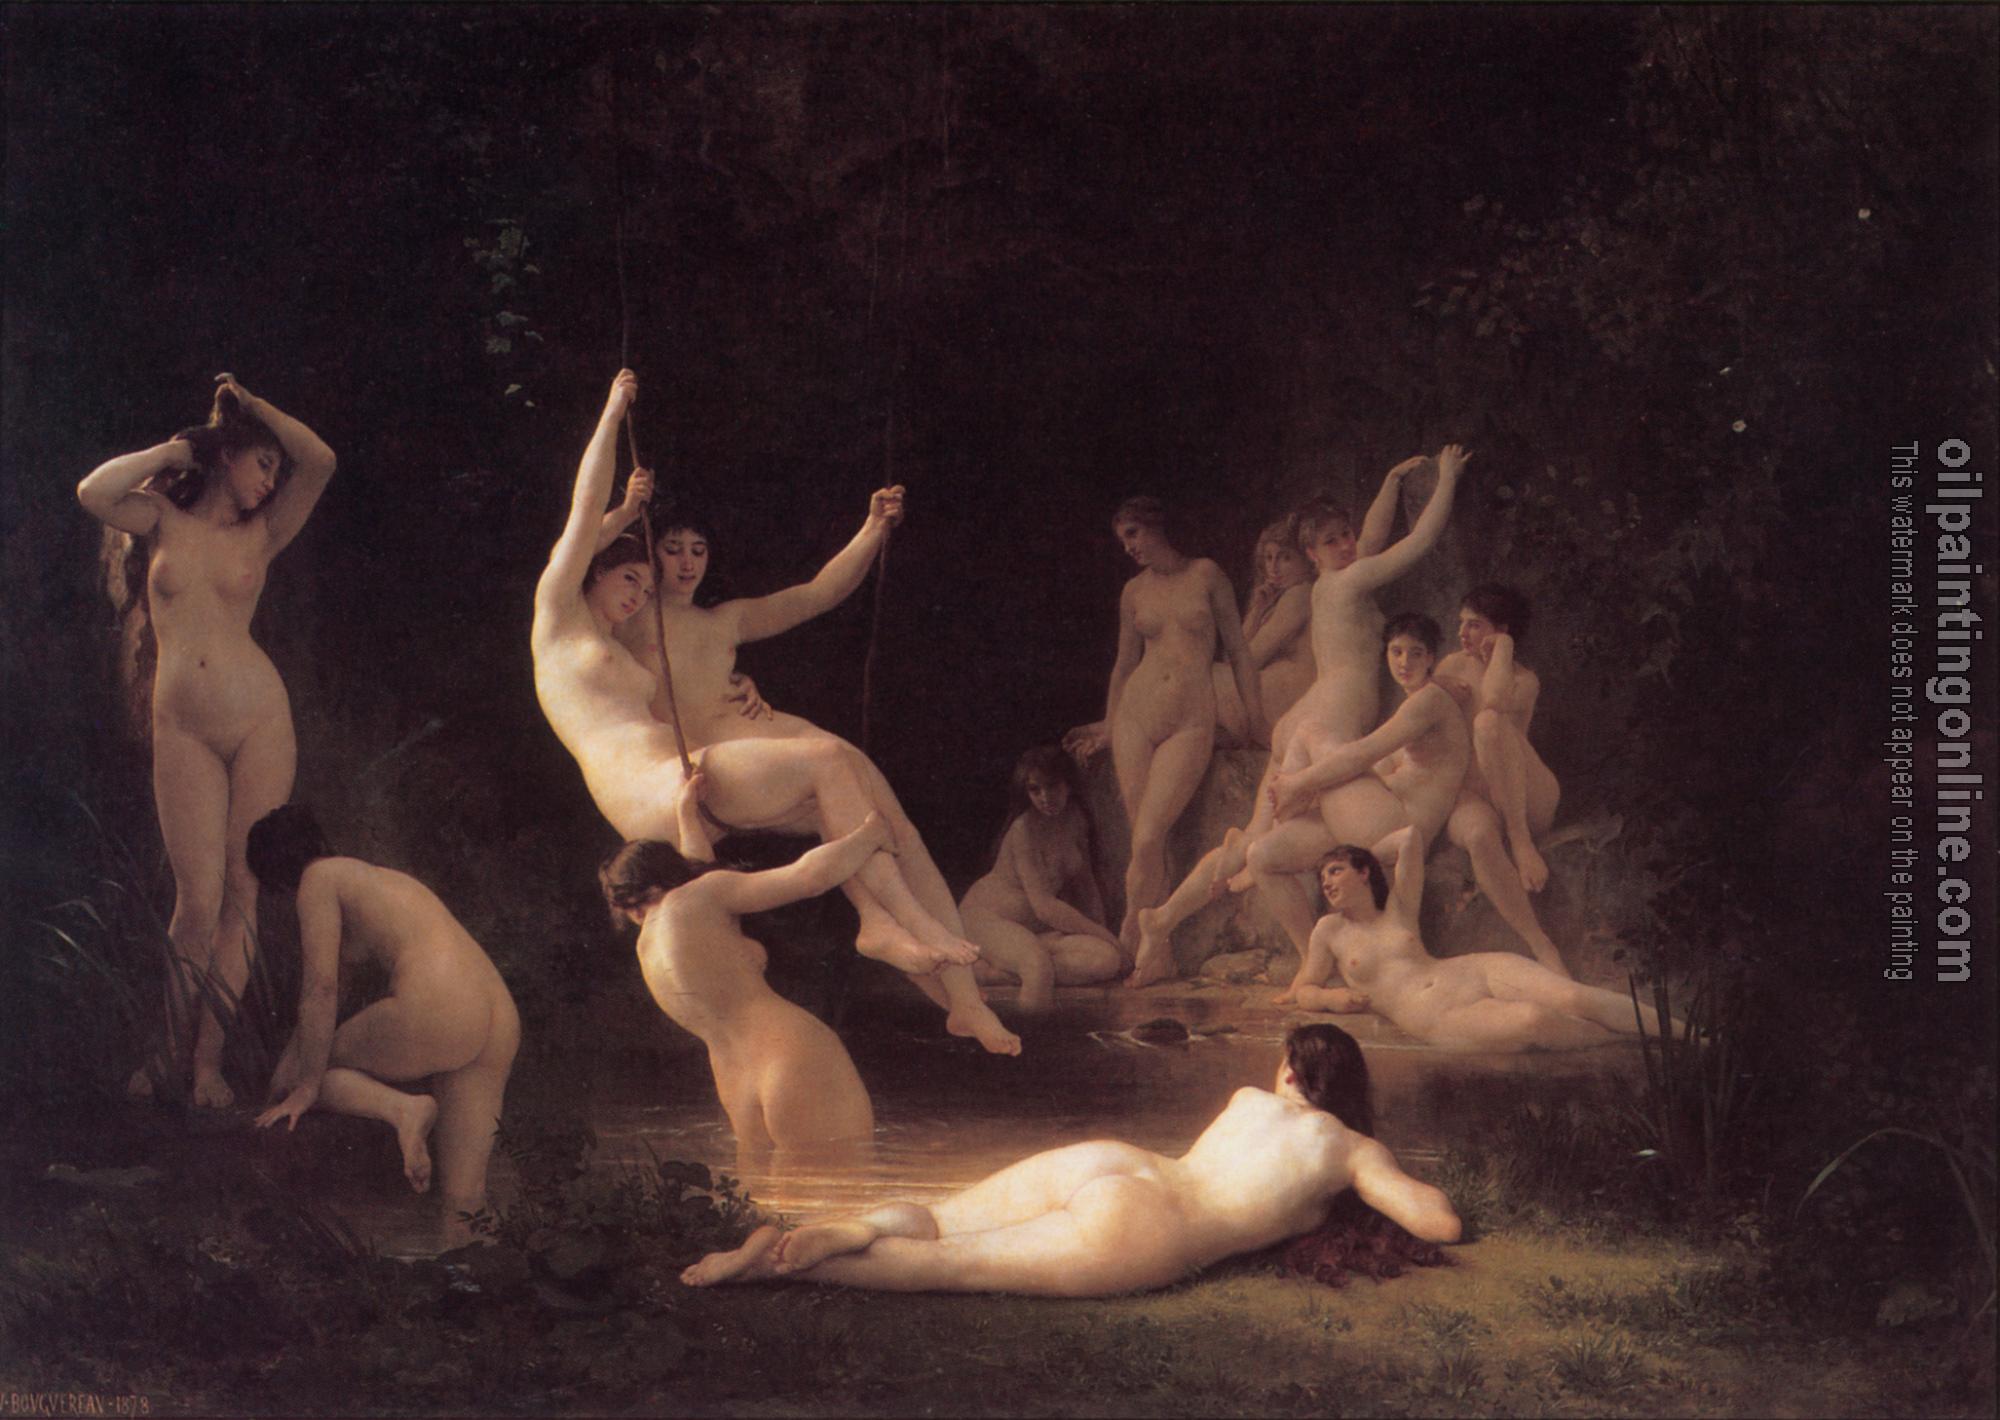 Bouguereau, William-Adolphe - The Nymphaeum